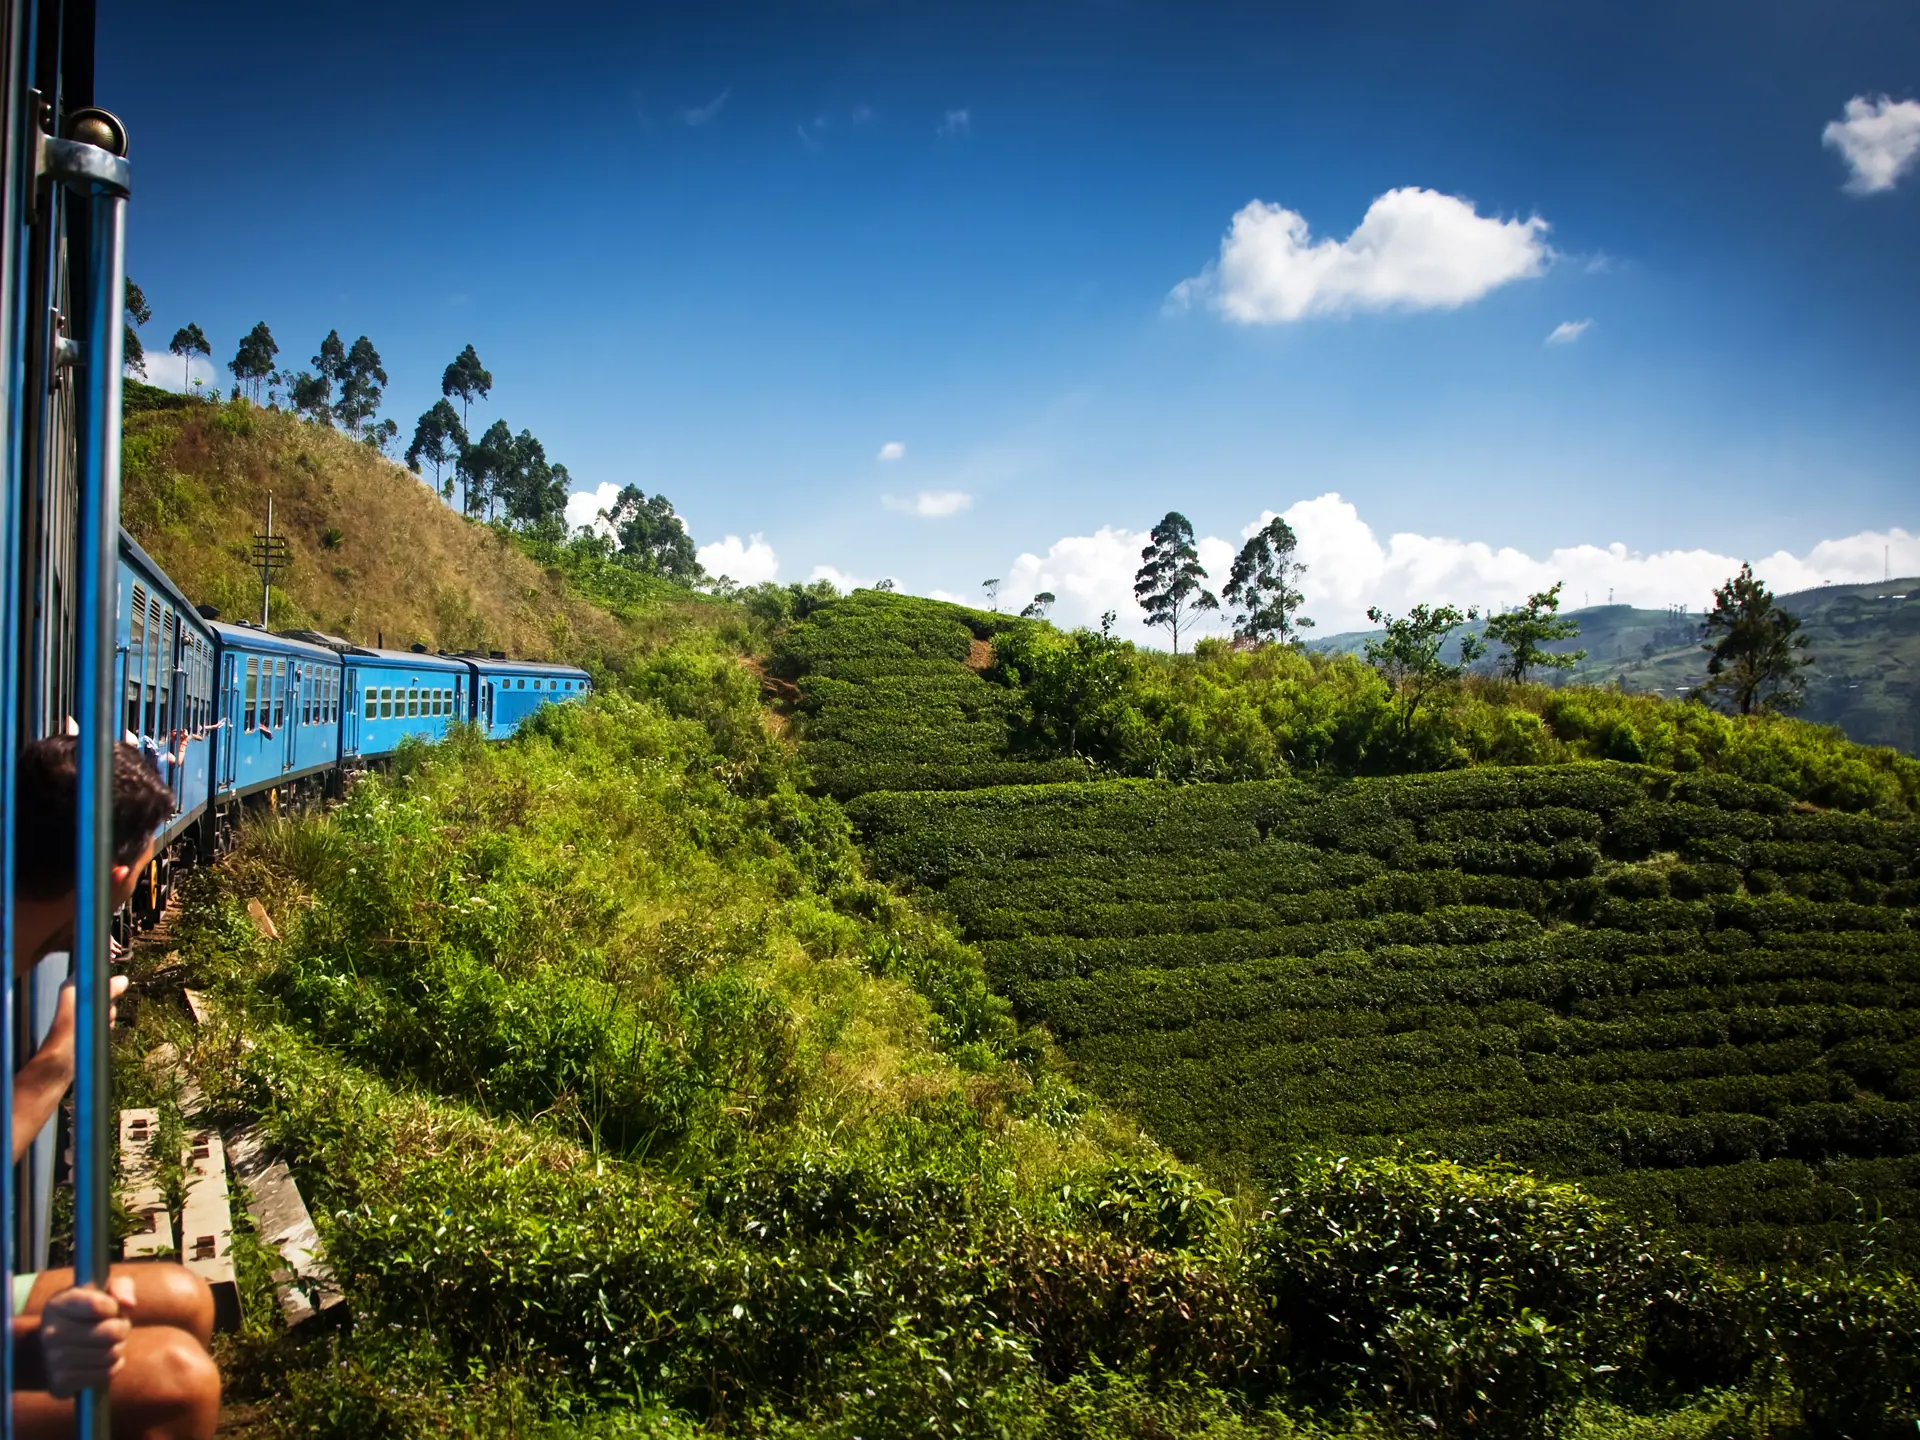 shutterstock_253468045 train from Nuwara Eliya to Kandy among tea plantations in the highlands of Sri Lanka.jpg